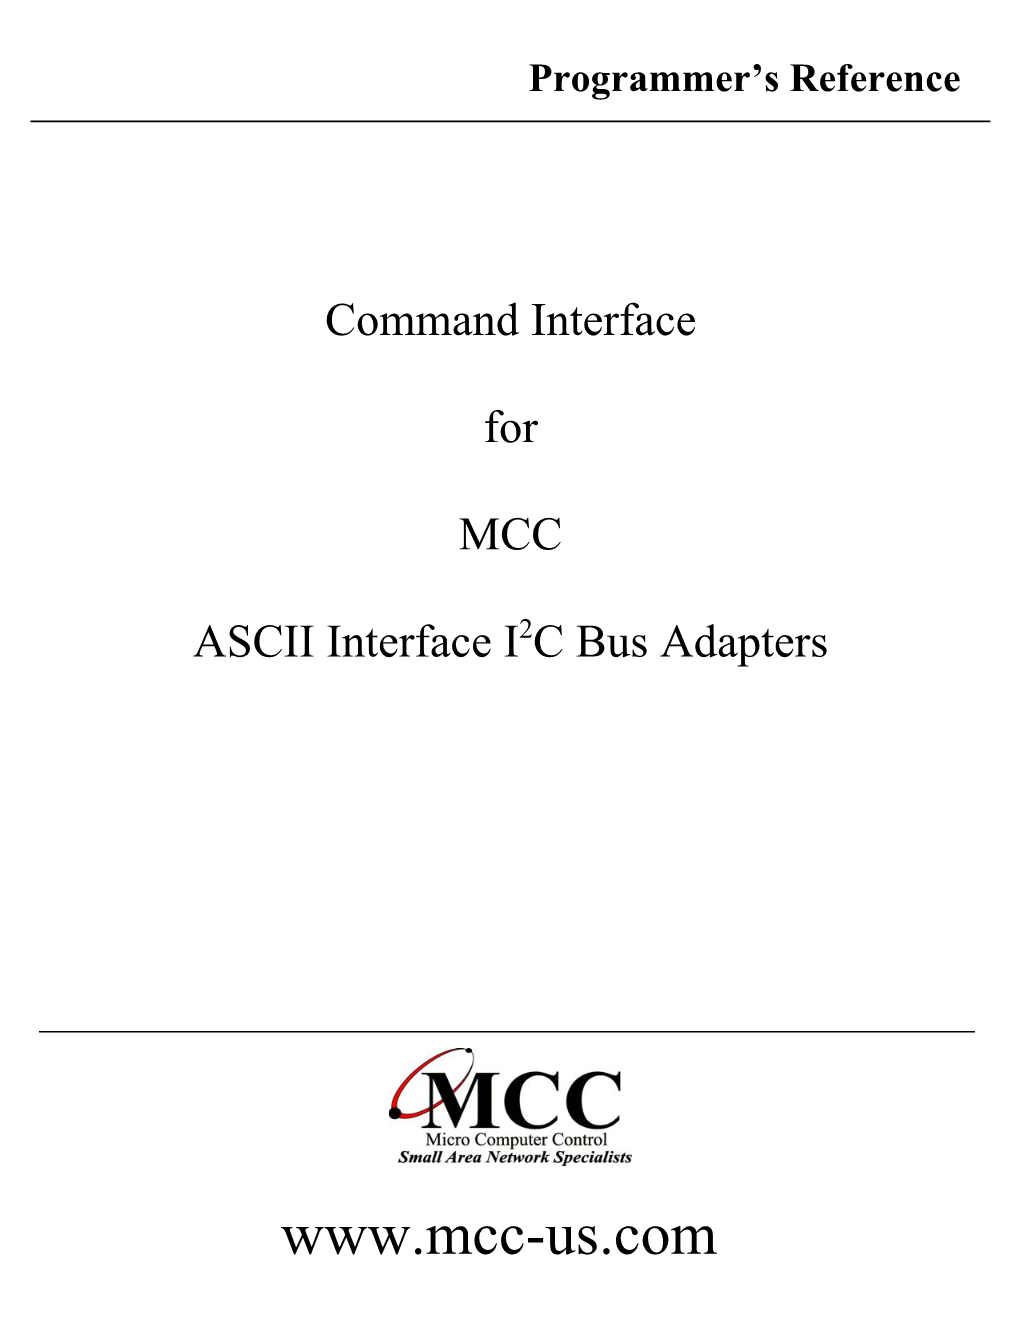 ASCII Command Interface Programmer's Guide